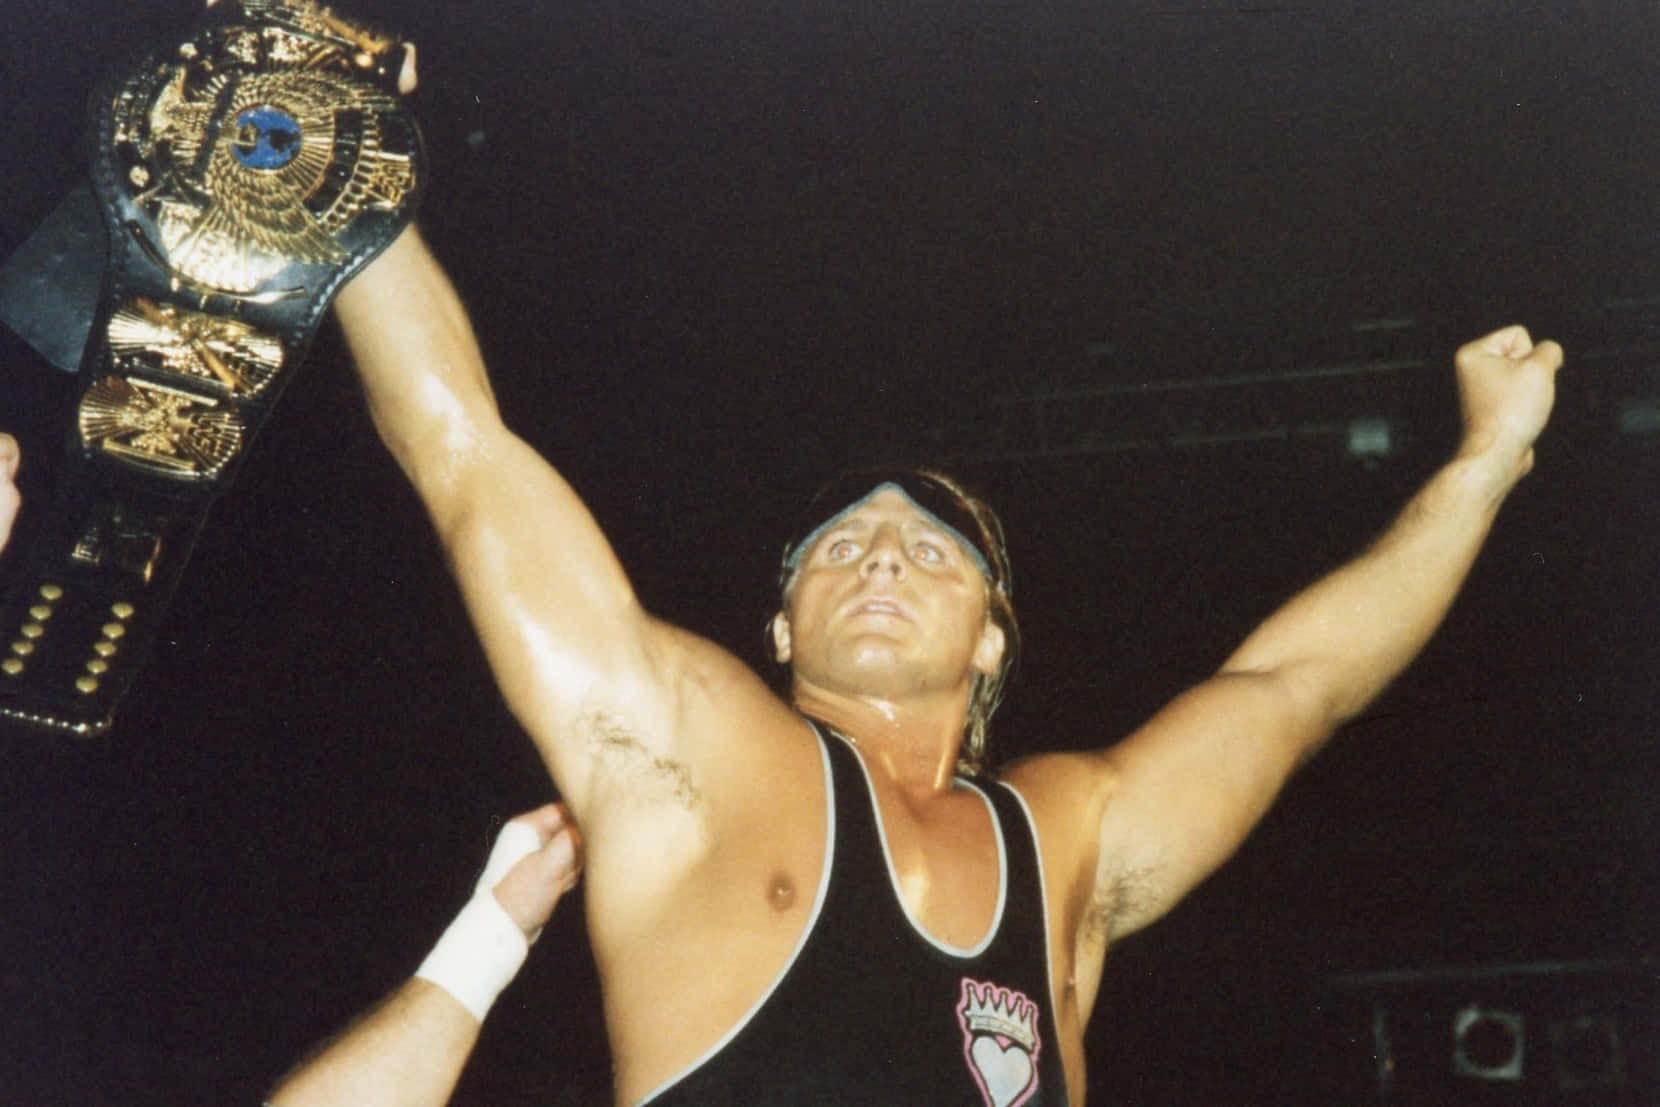 Owen Hart World Heavyweight Champion Background